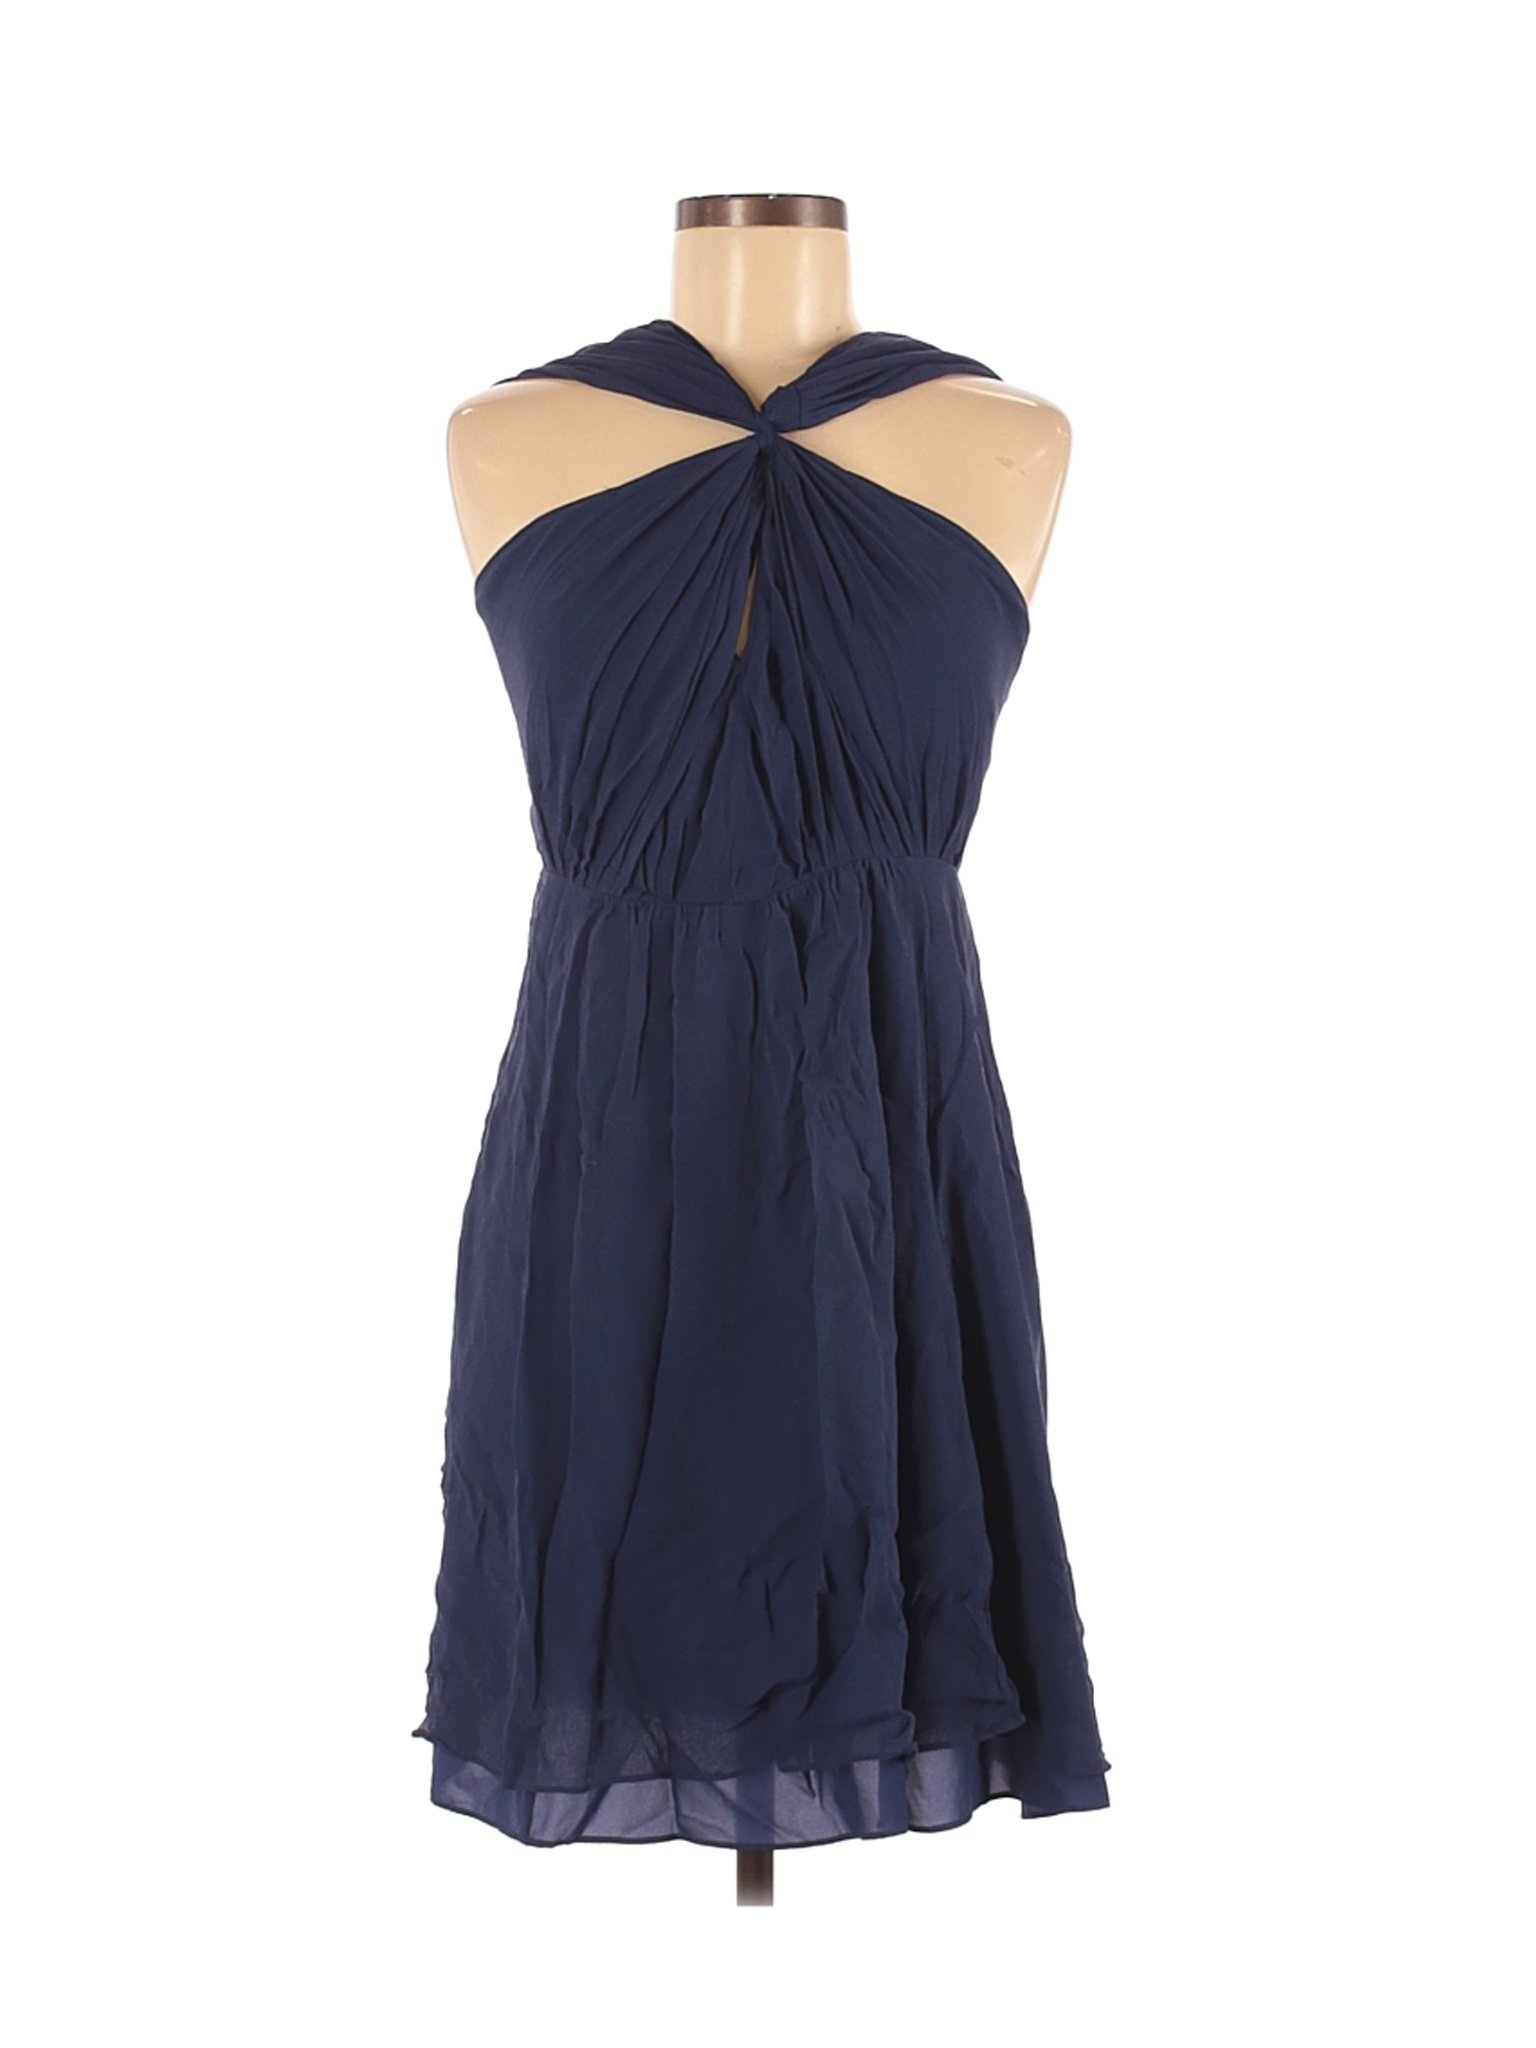 H&M Women Blue Cocktail Dress 8 | eBay